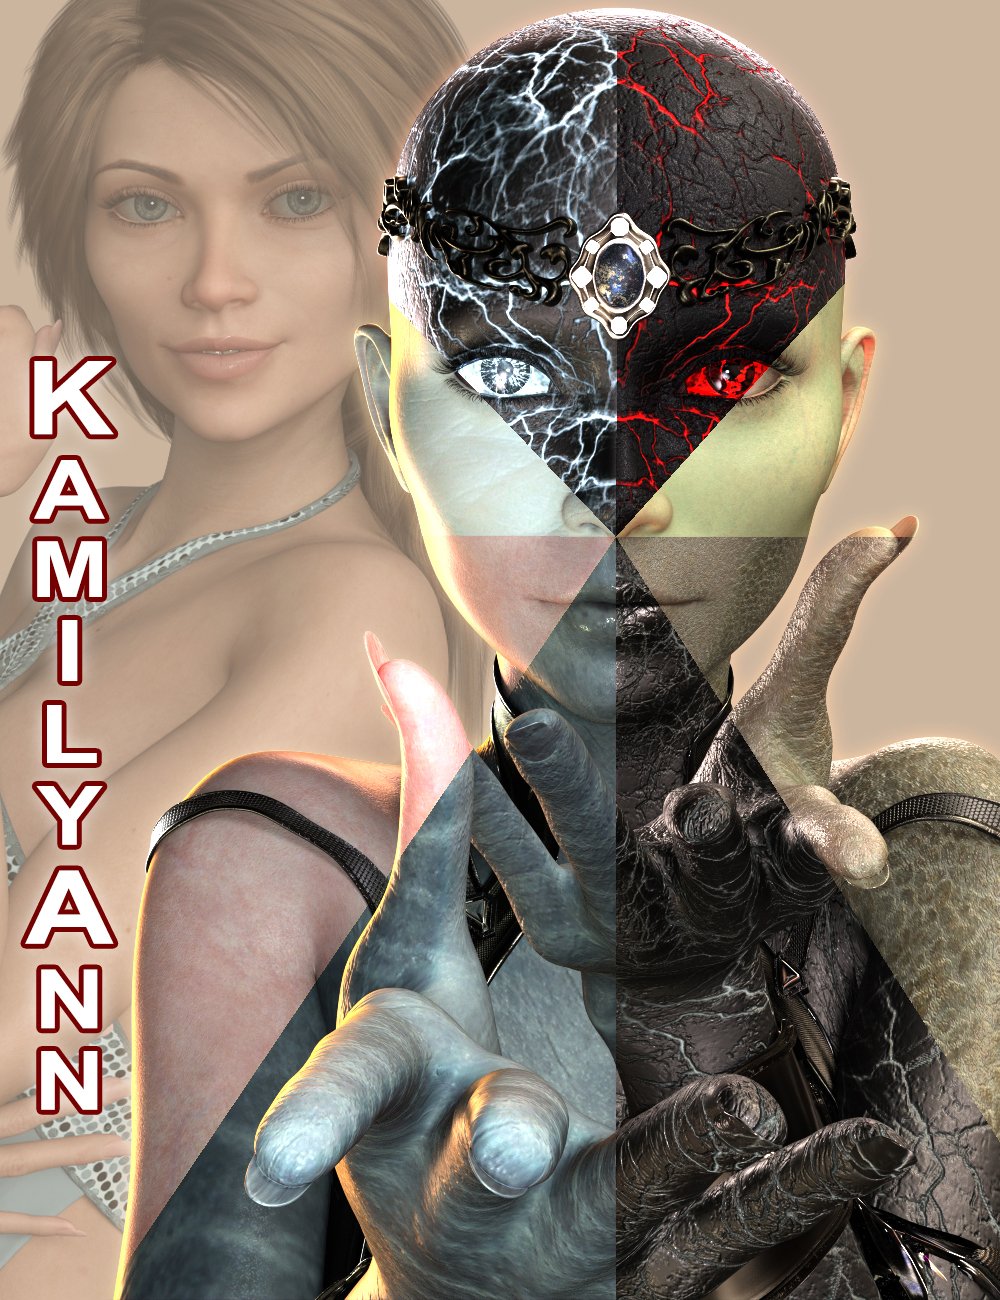 KamilyAnn for Zelara 8 by: 3Diva, 3D Models by Daz 3D